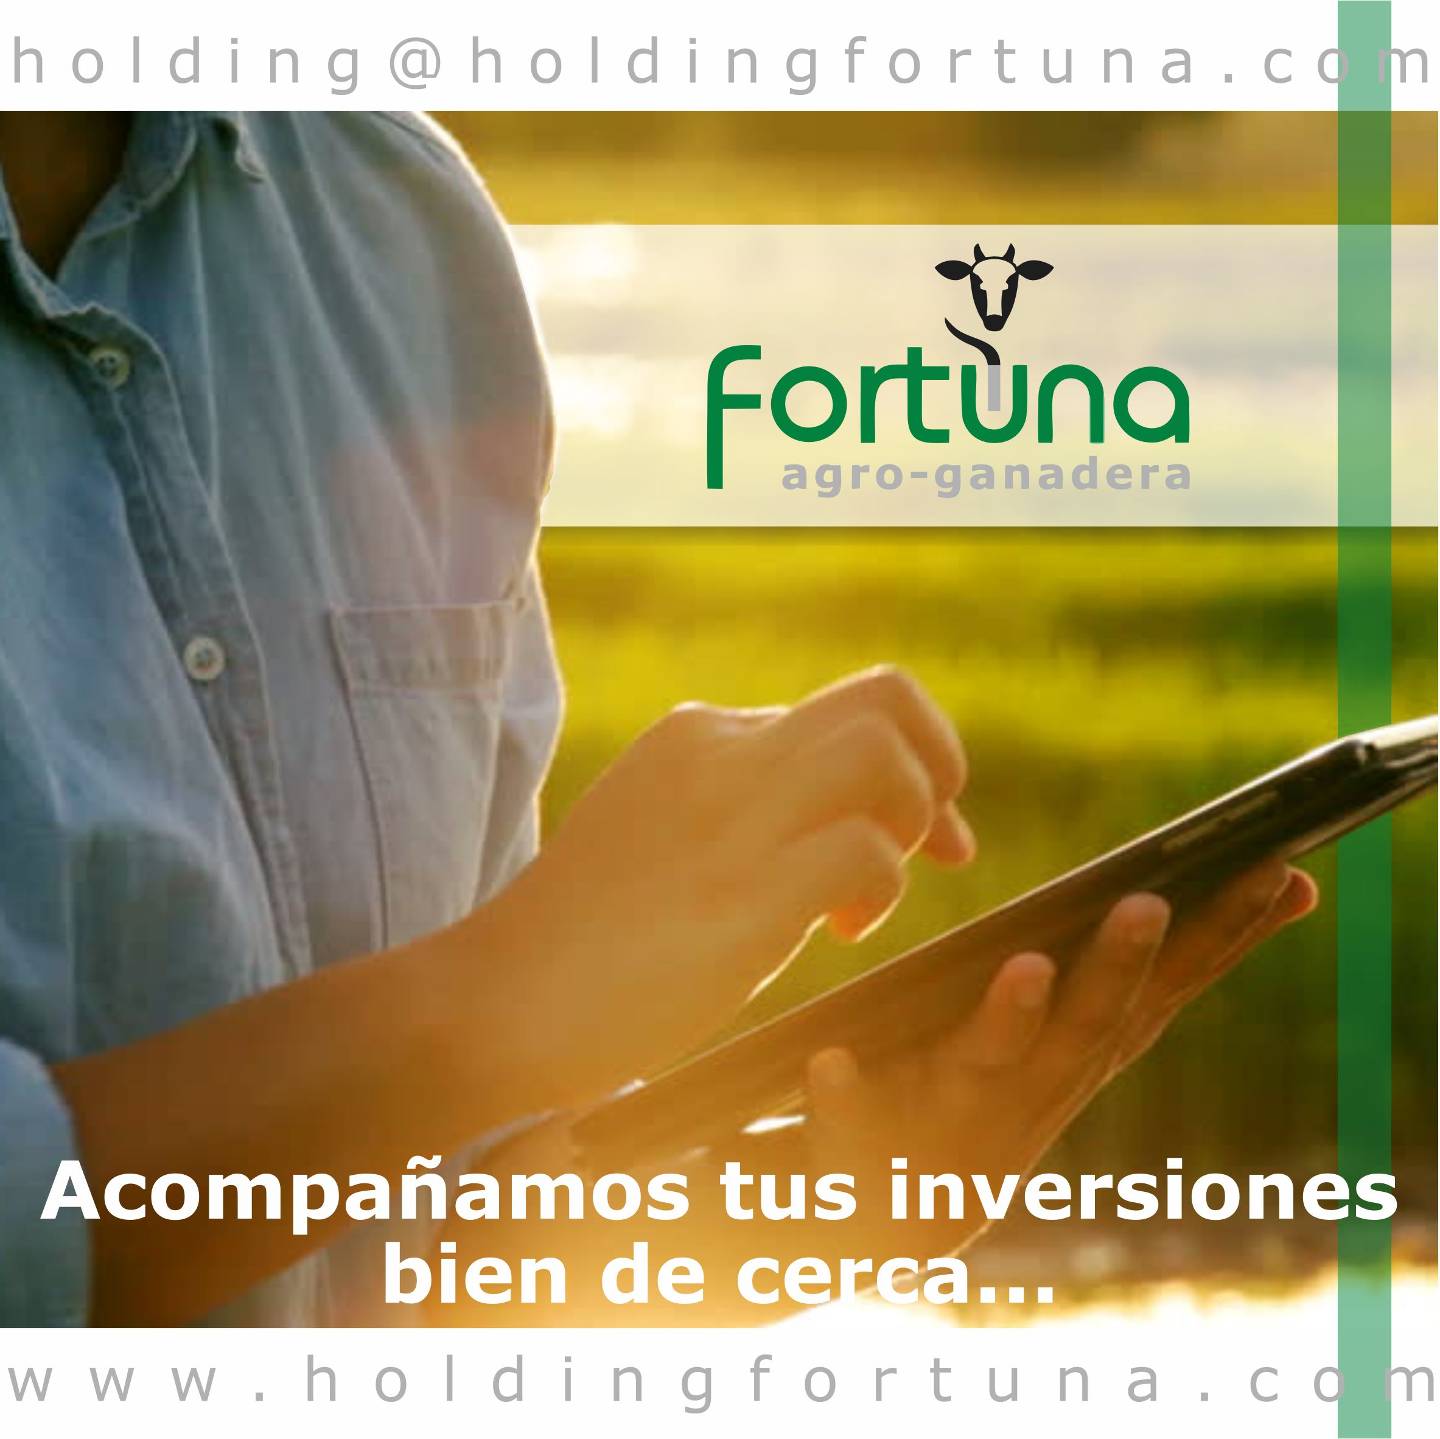 Holding Fortuna Agro-ganadera